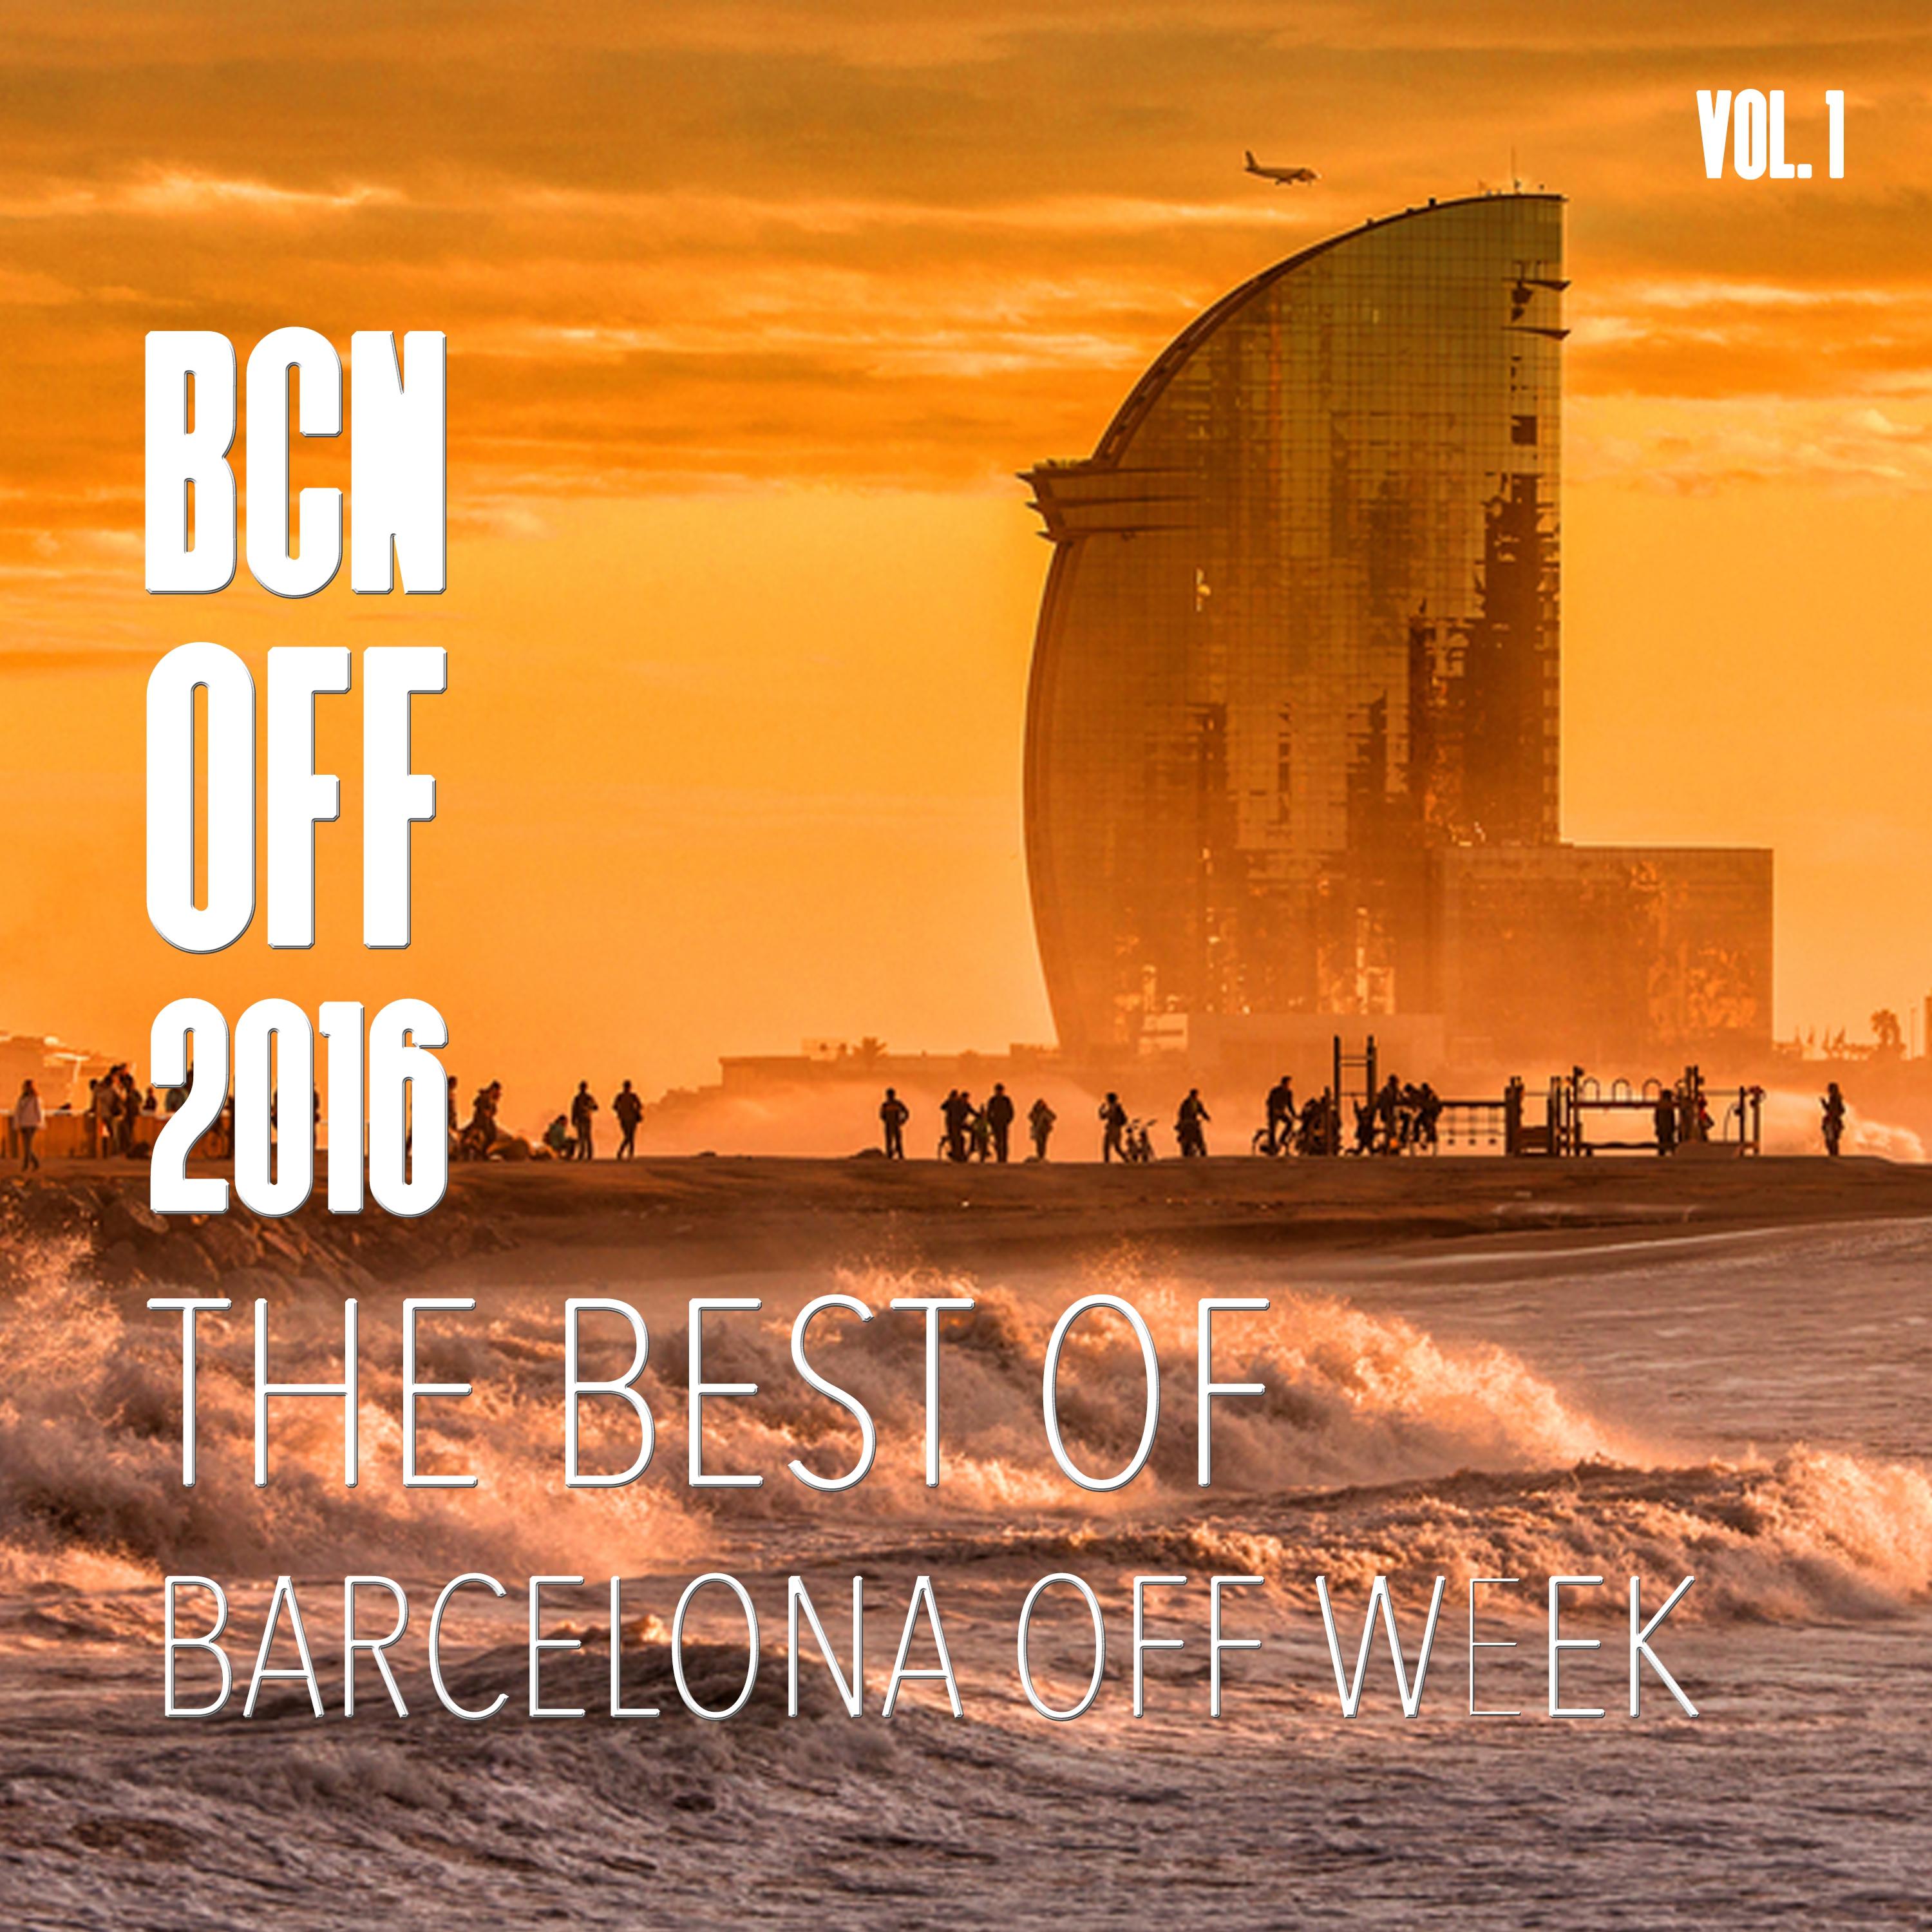 BCN OFF 2016, The Best Of, Vol. 1